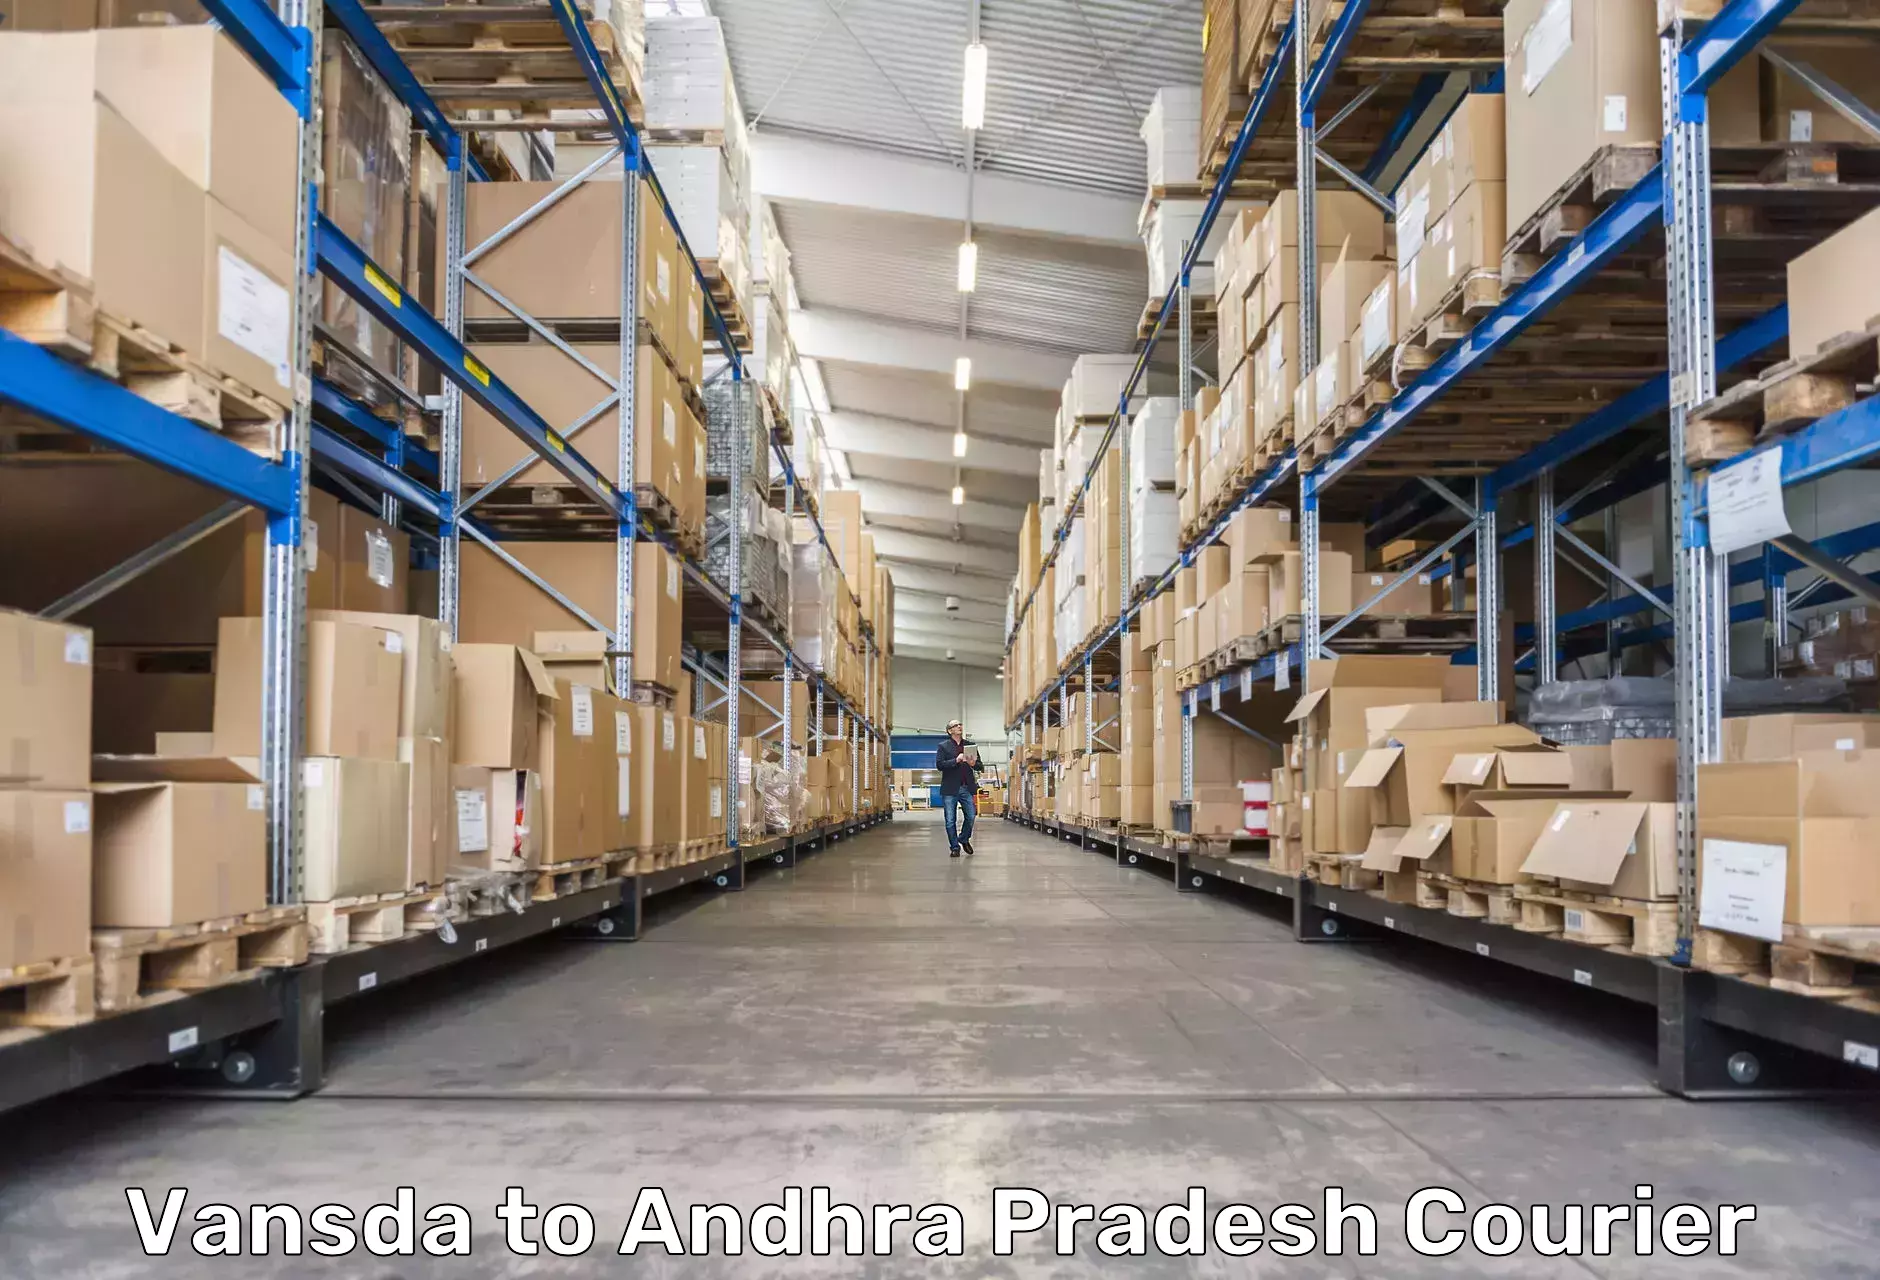 Advanced courier platforms Vansda to Tirupati